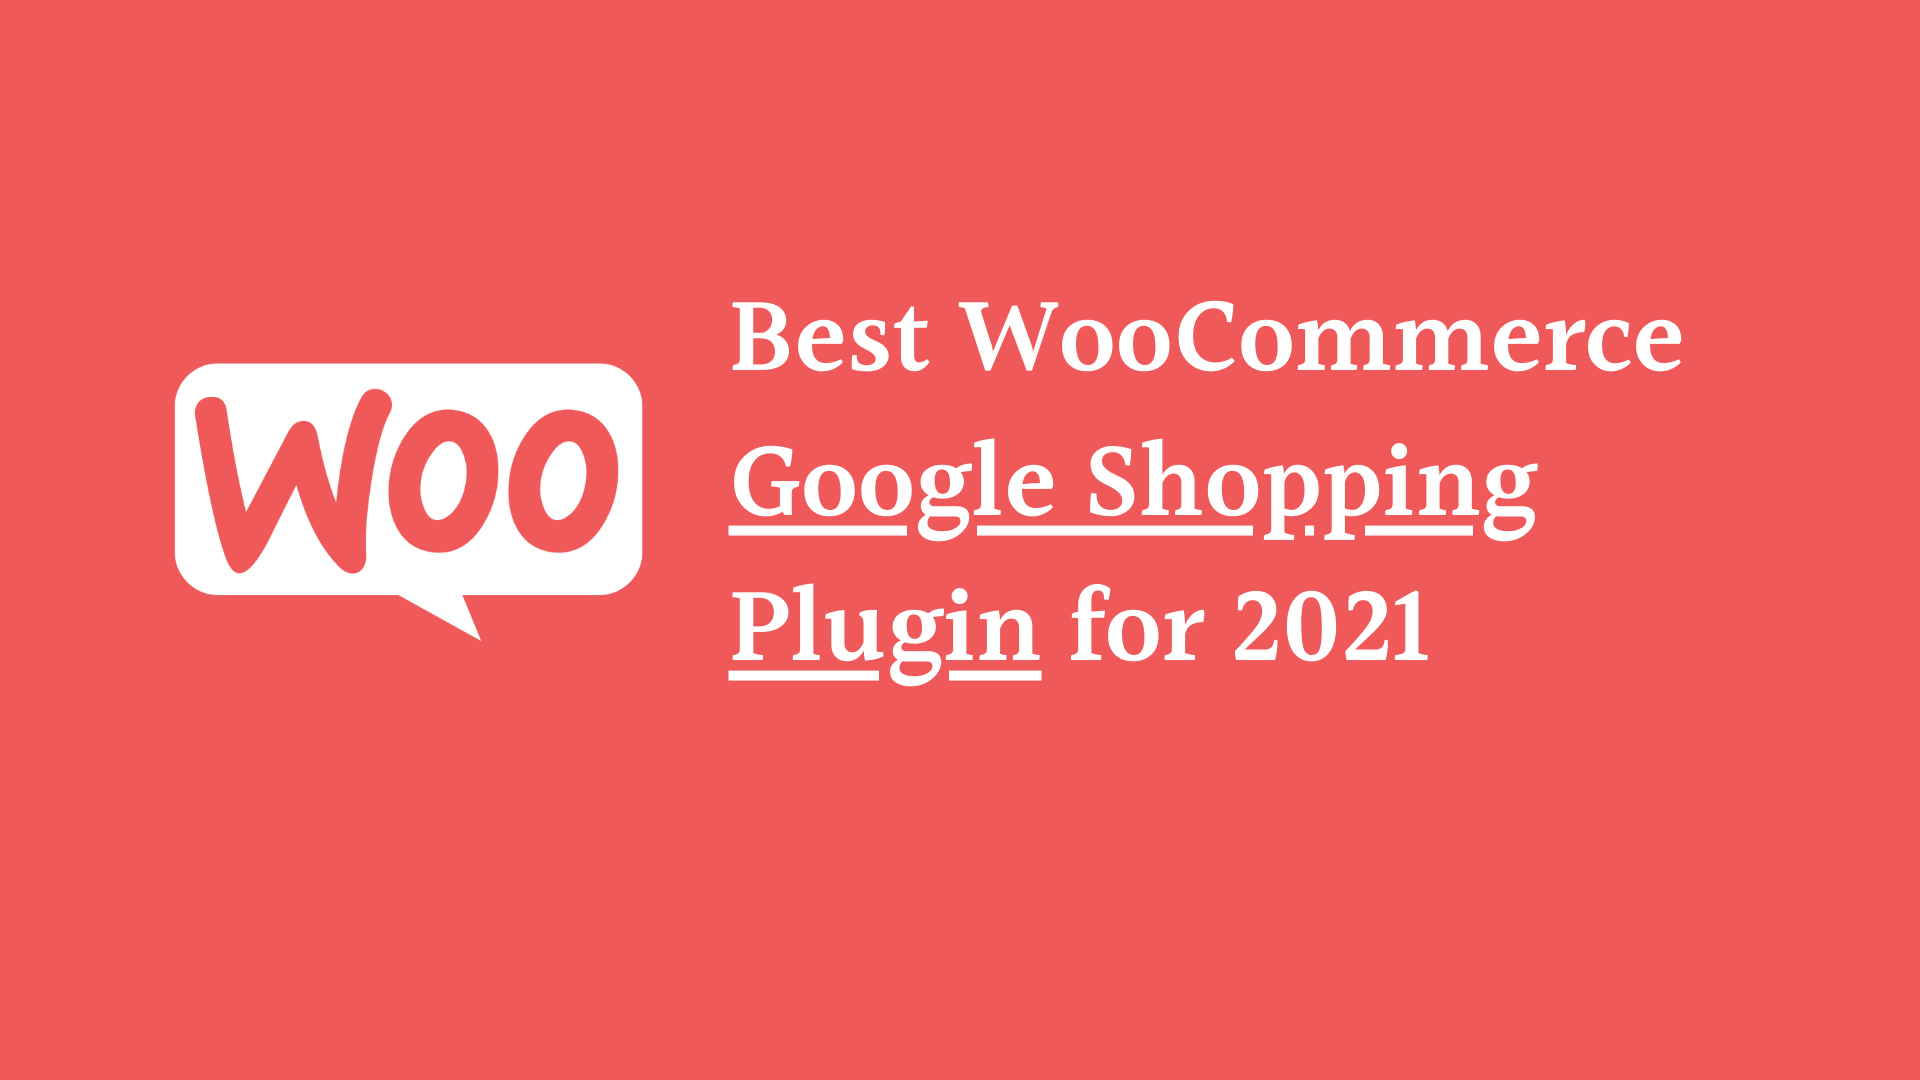 Best WooCommerce Google Shopping Plugin for 2021